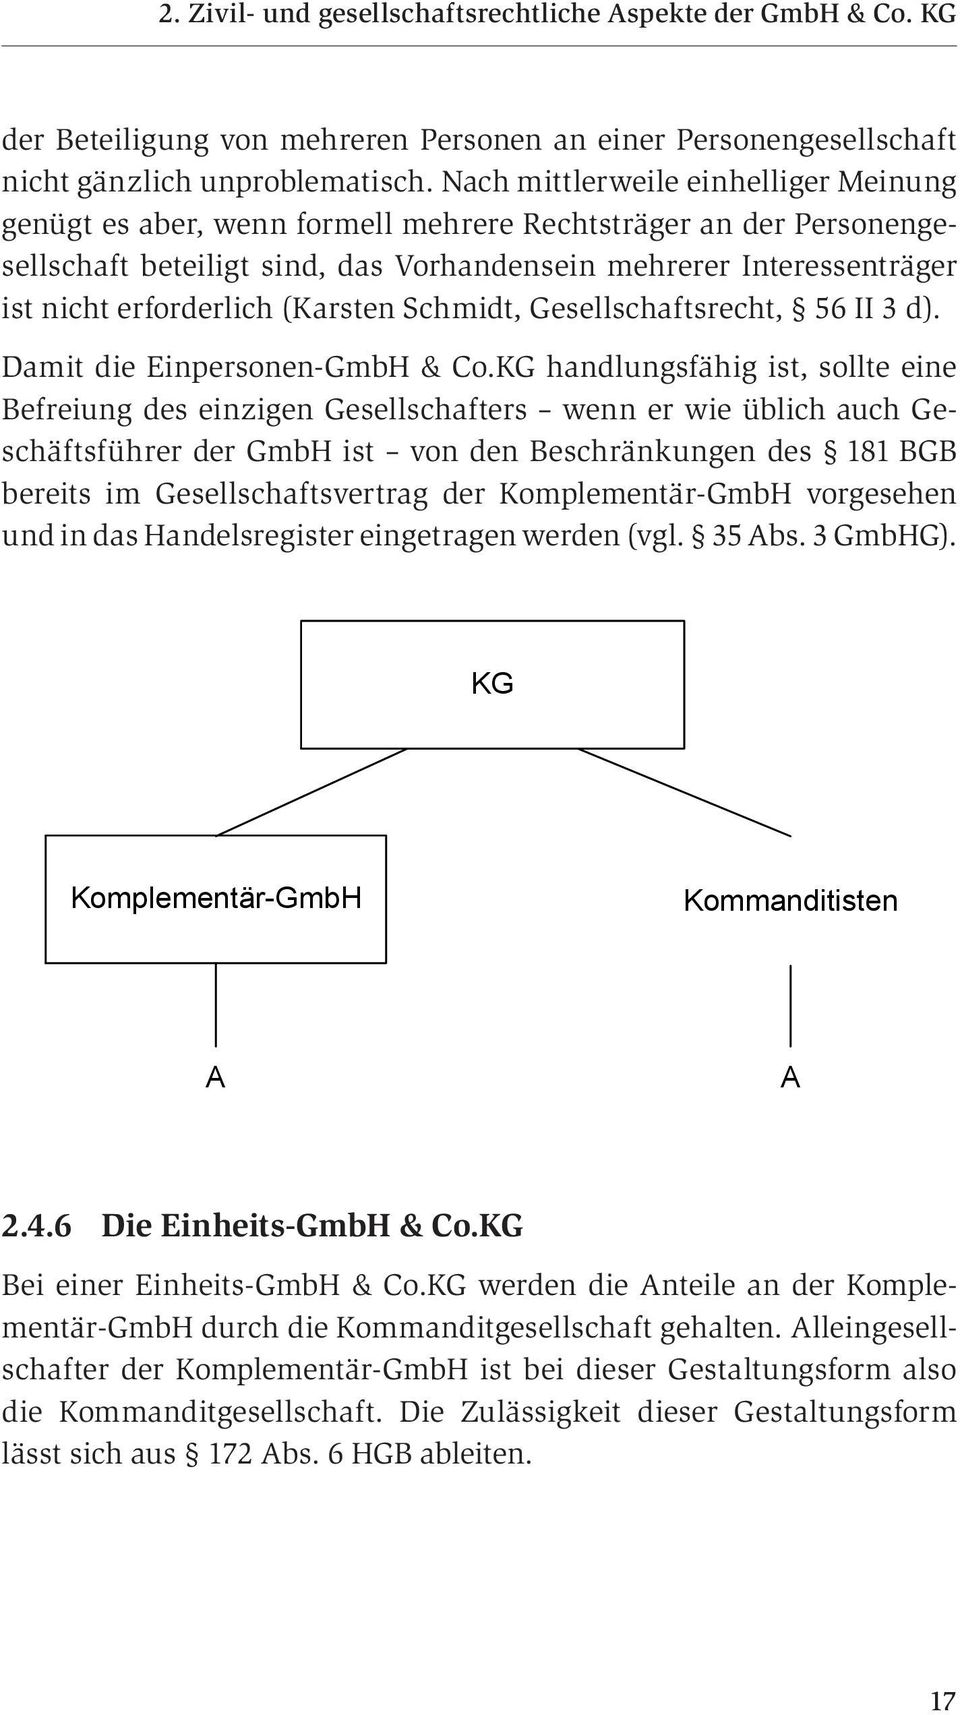 (Karsten Schmidt, Gesellschaftsrecht, 56 II 3 d). Damit die Einpersonen-GmbH & Co.